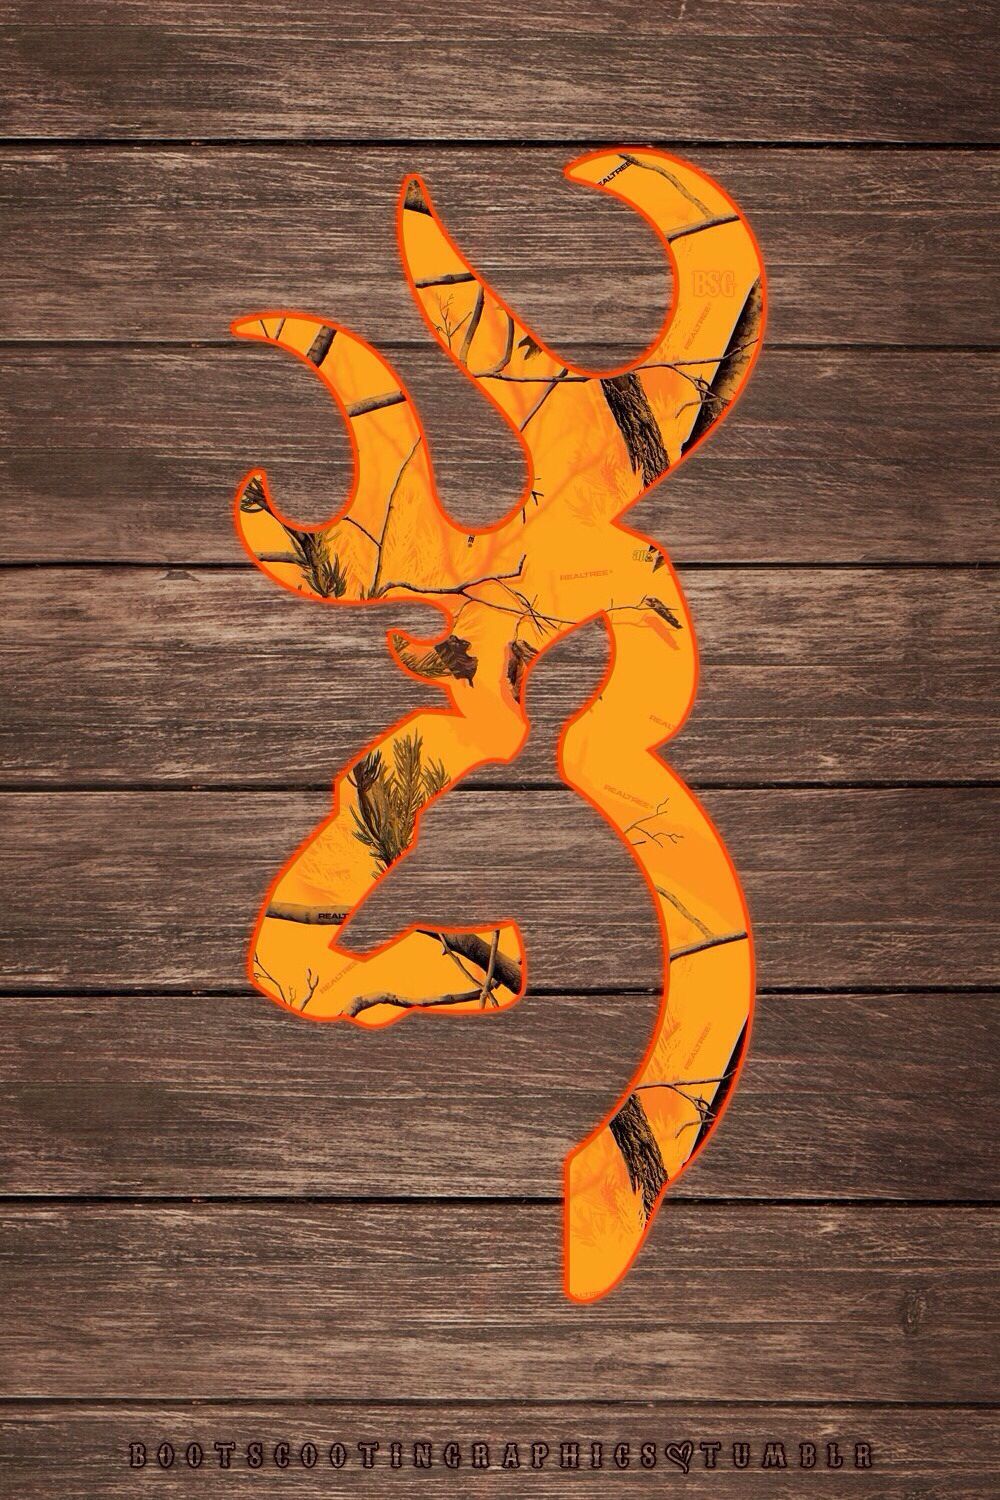 Blaze Orange Camouflage Wallpaper